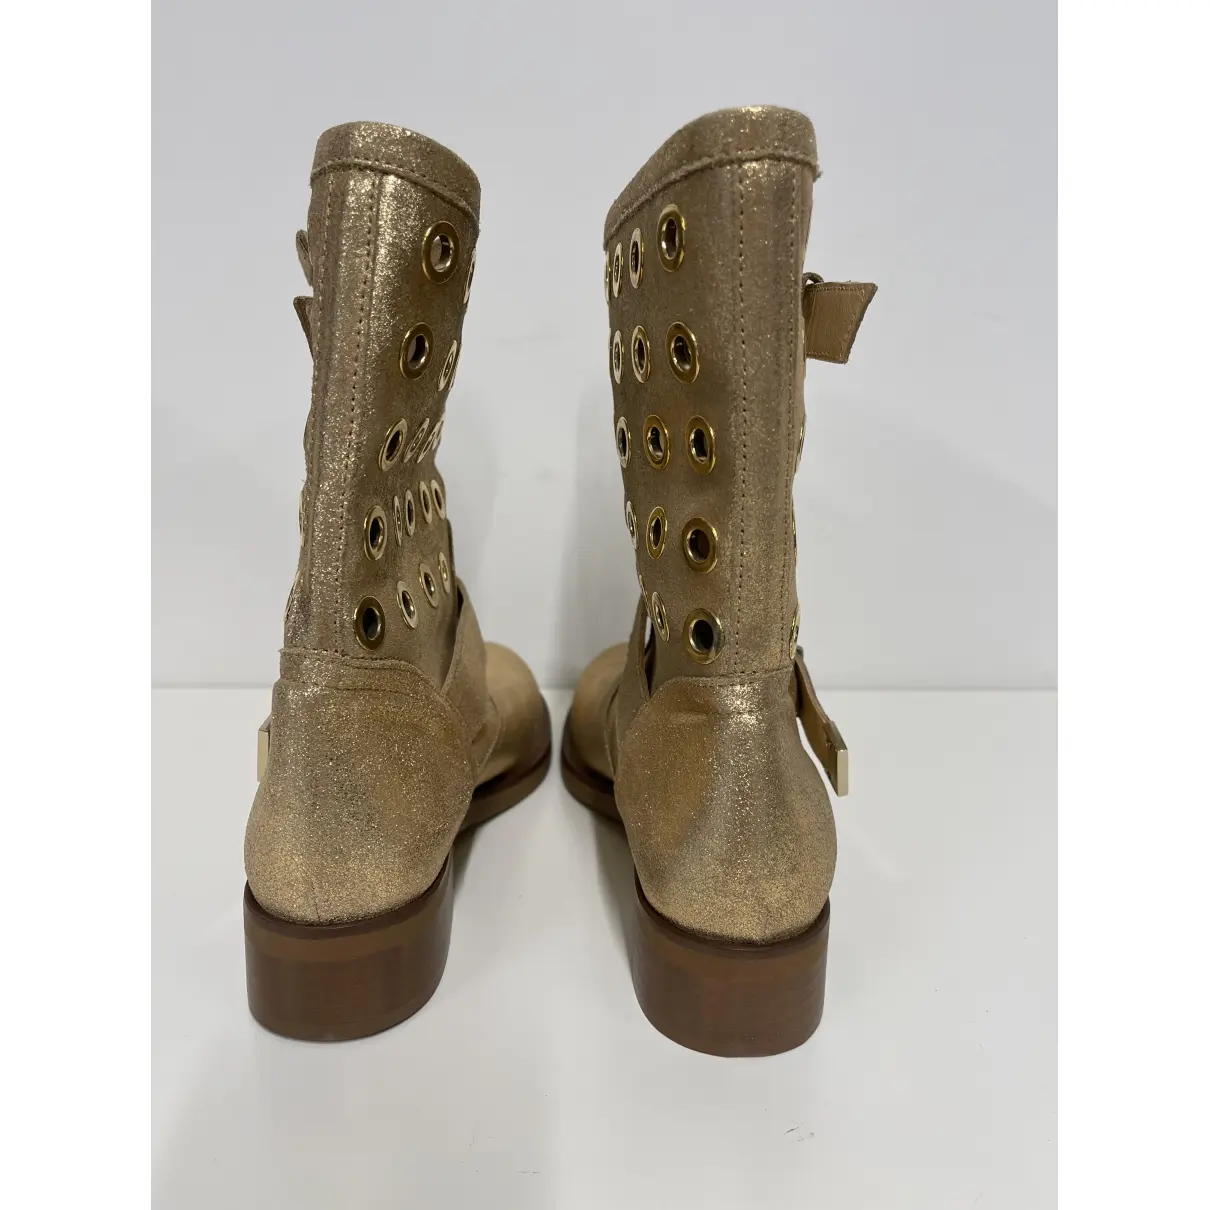 Leather boots Elisabetta Franchi